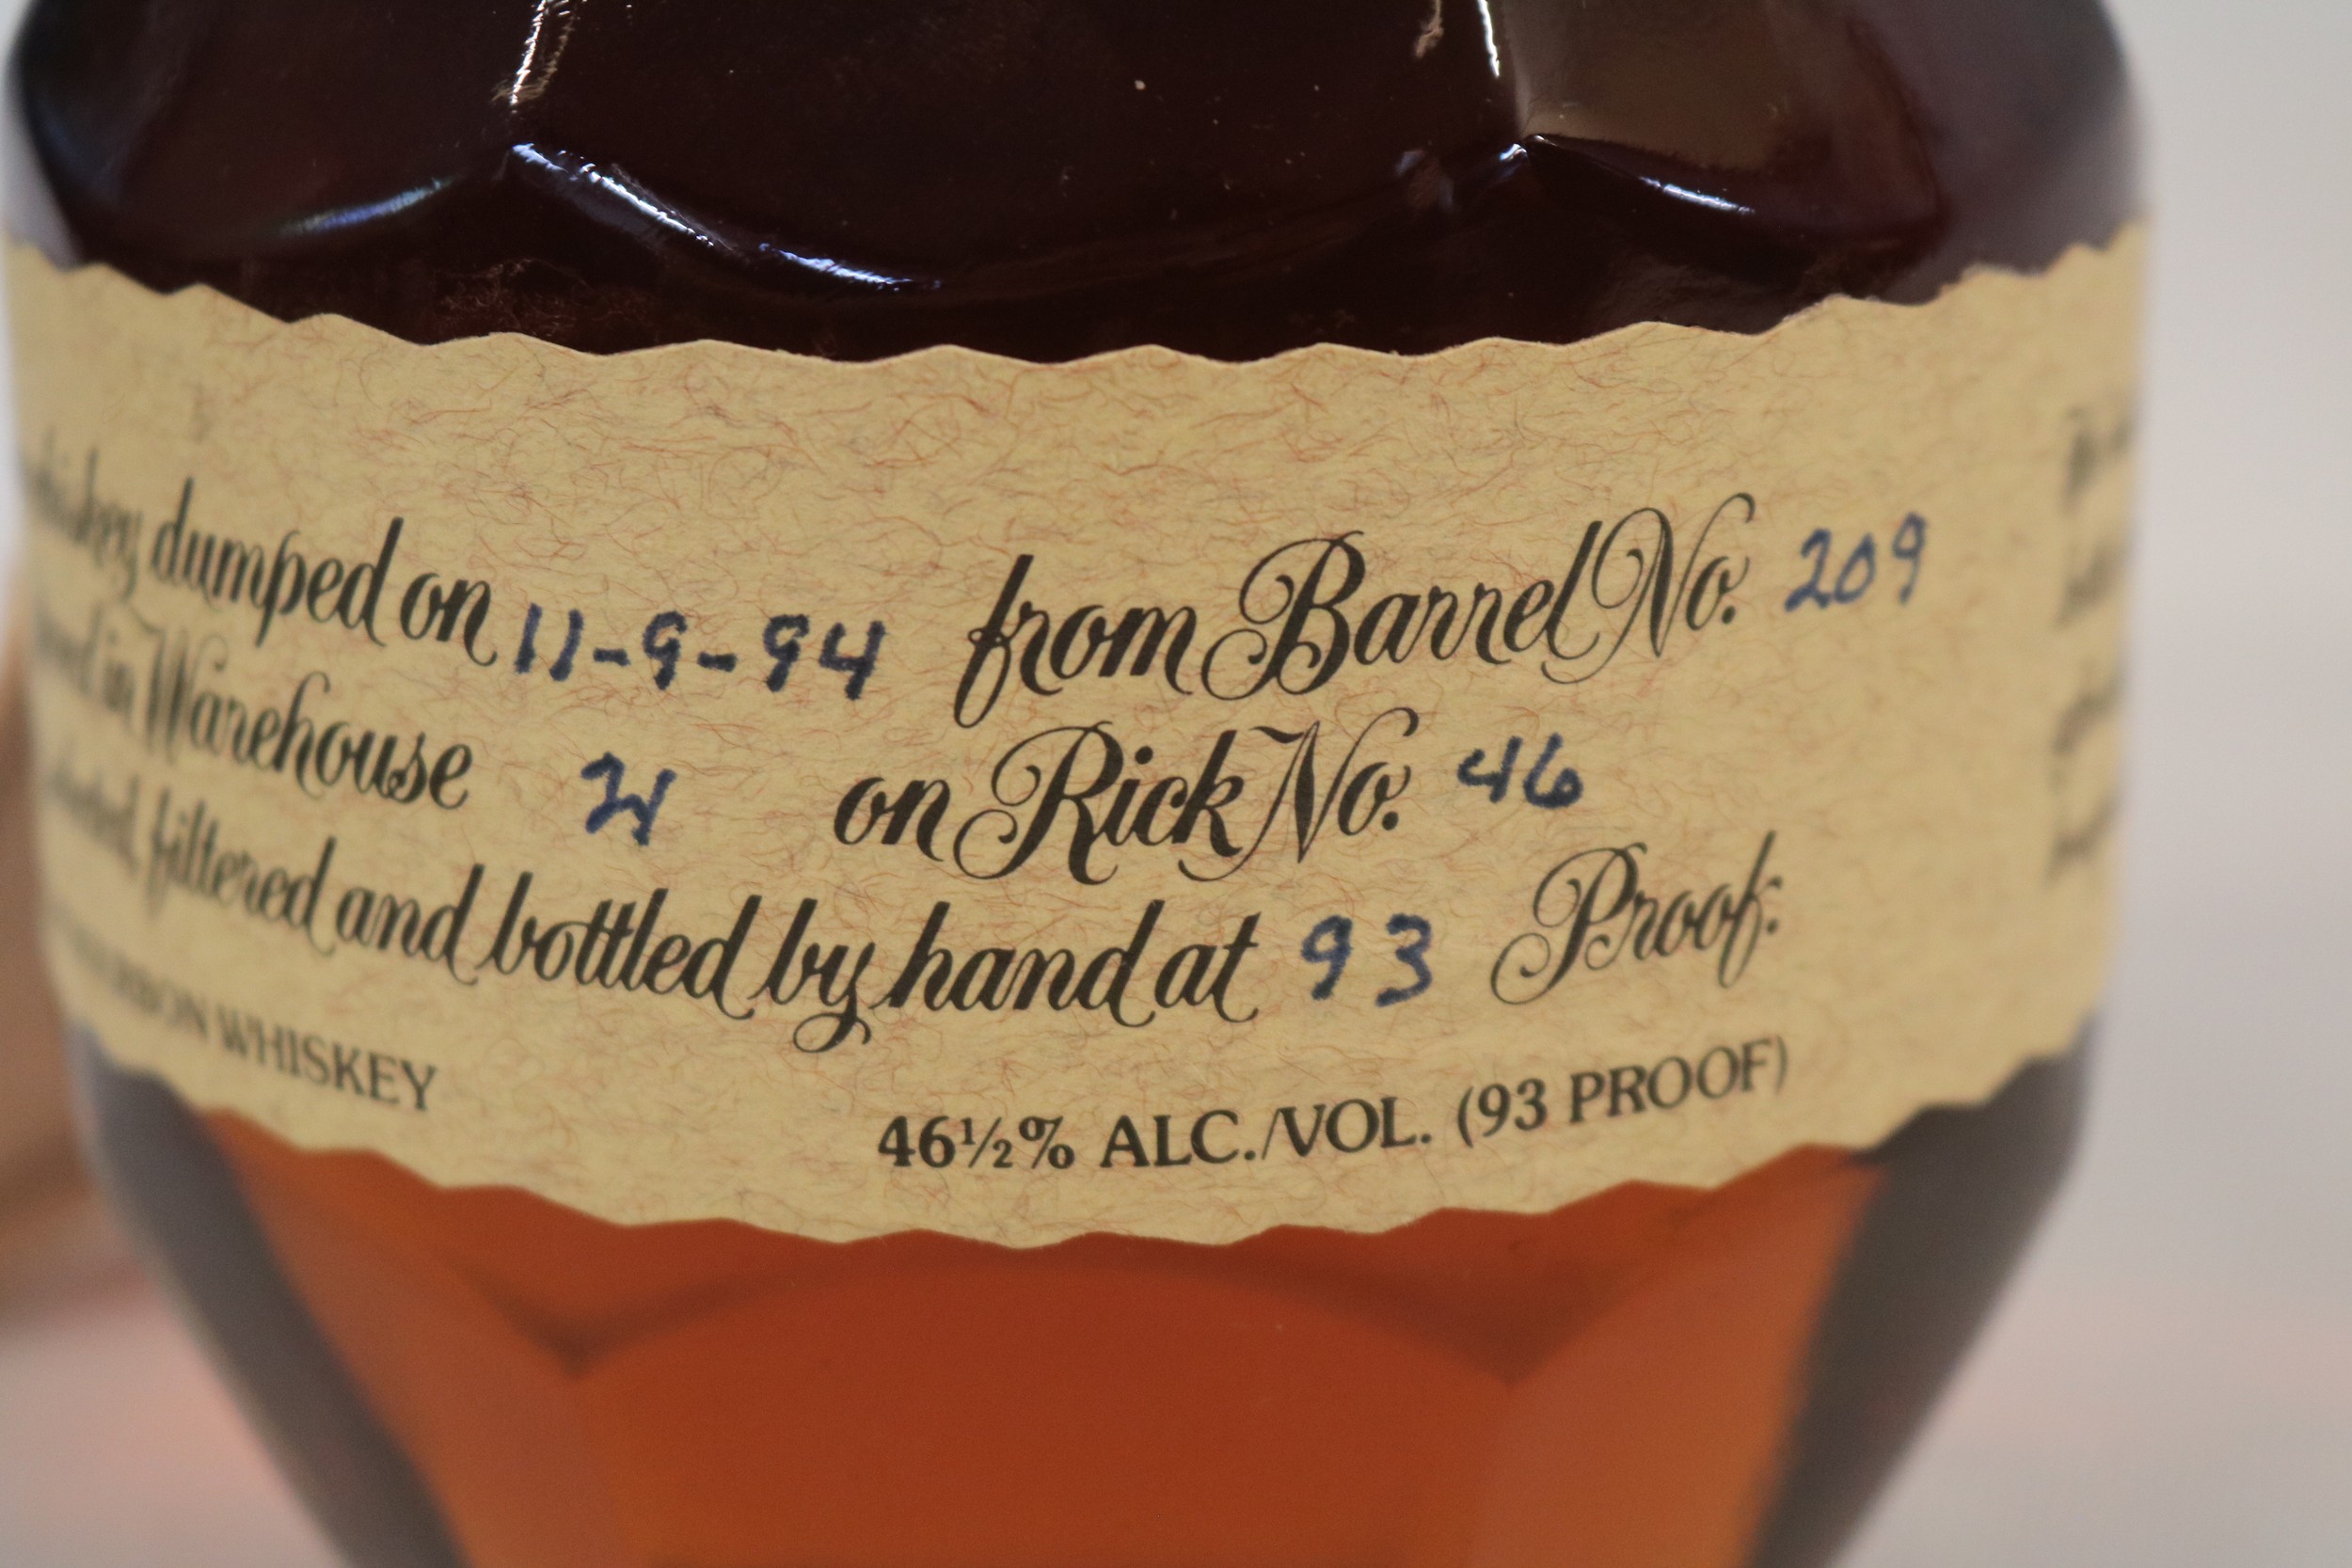 Blantons Single Barrel Bourbon Whiskey dated 11/09/94 Barrel No 209 Kentucky Straight Bourbon - Image 2 of 2